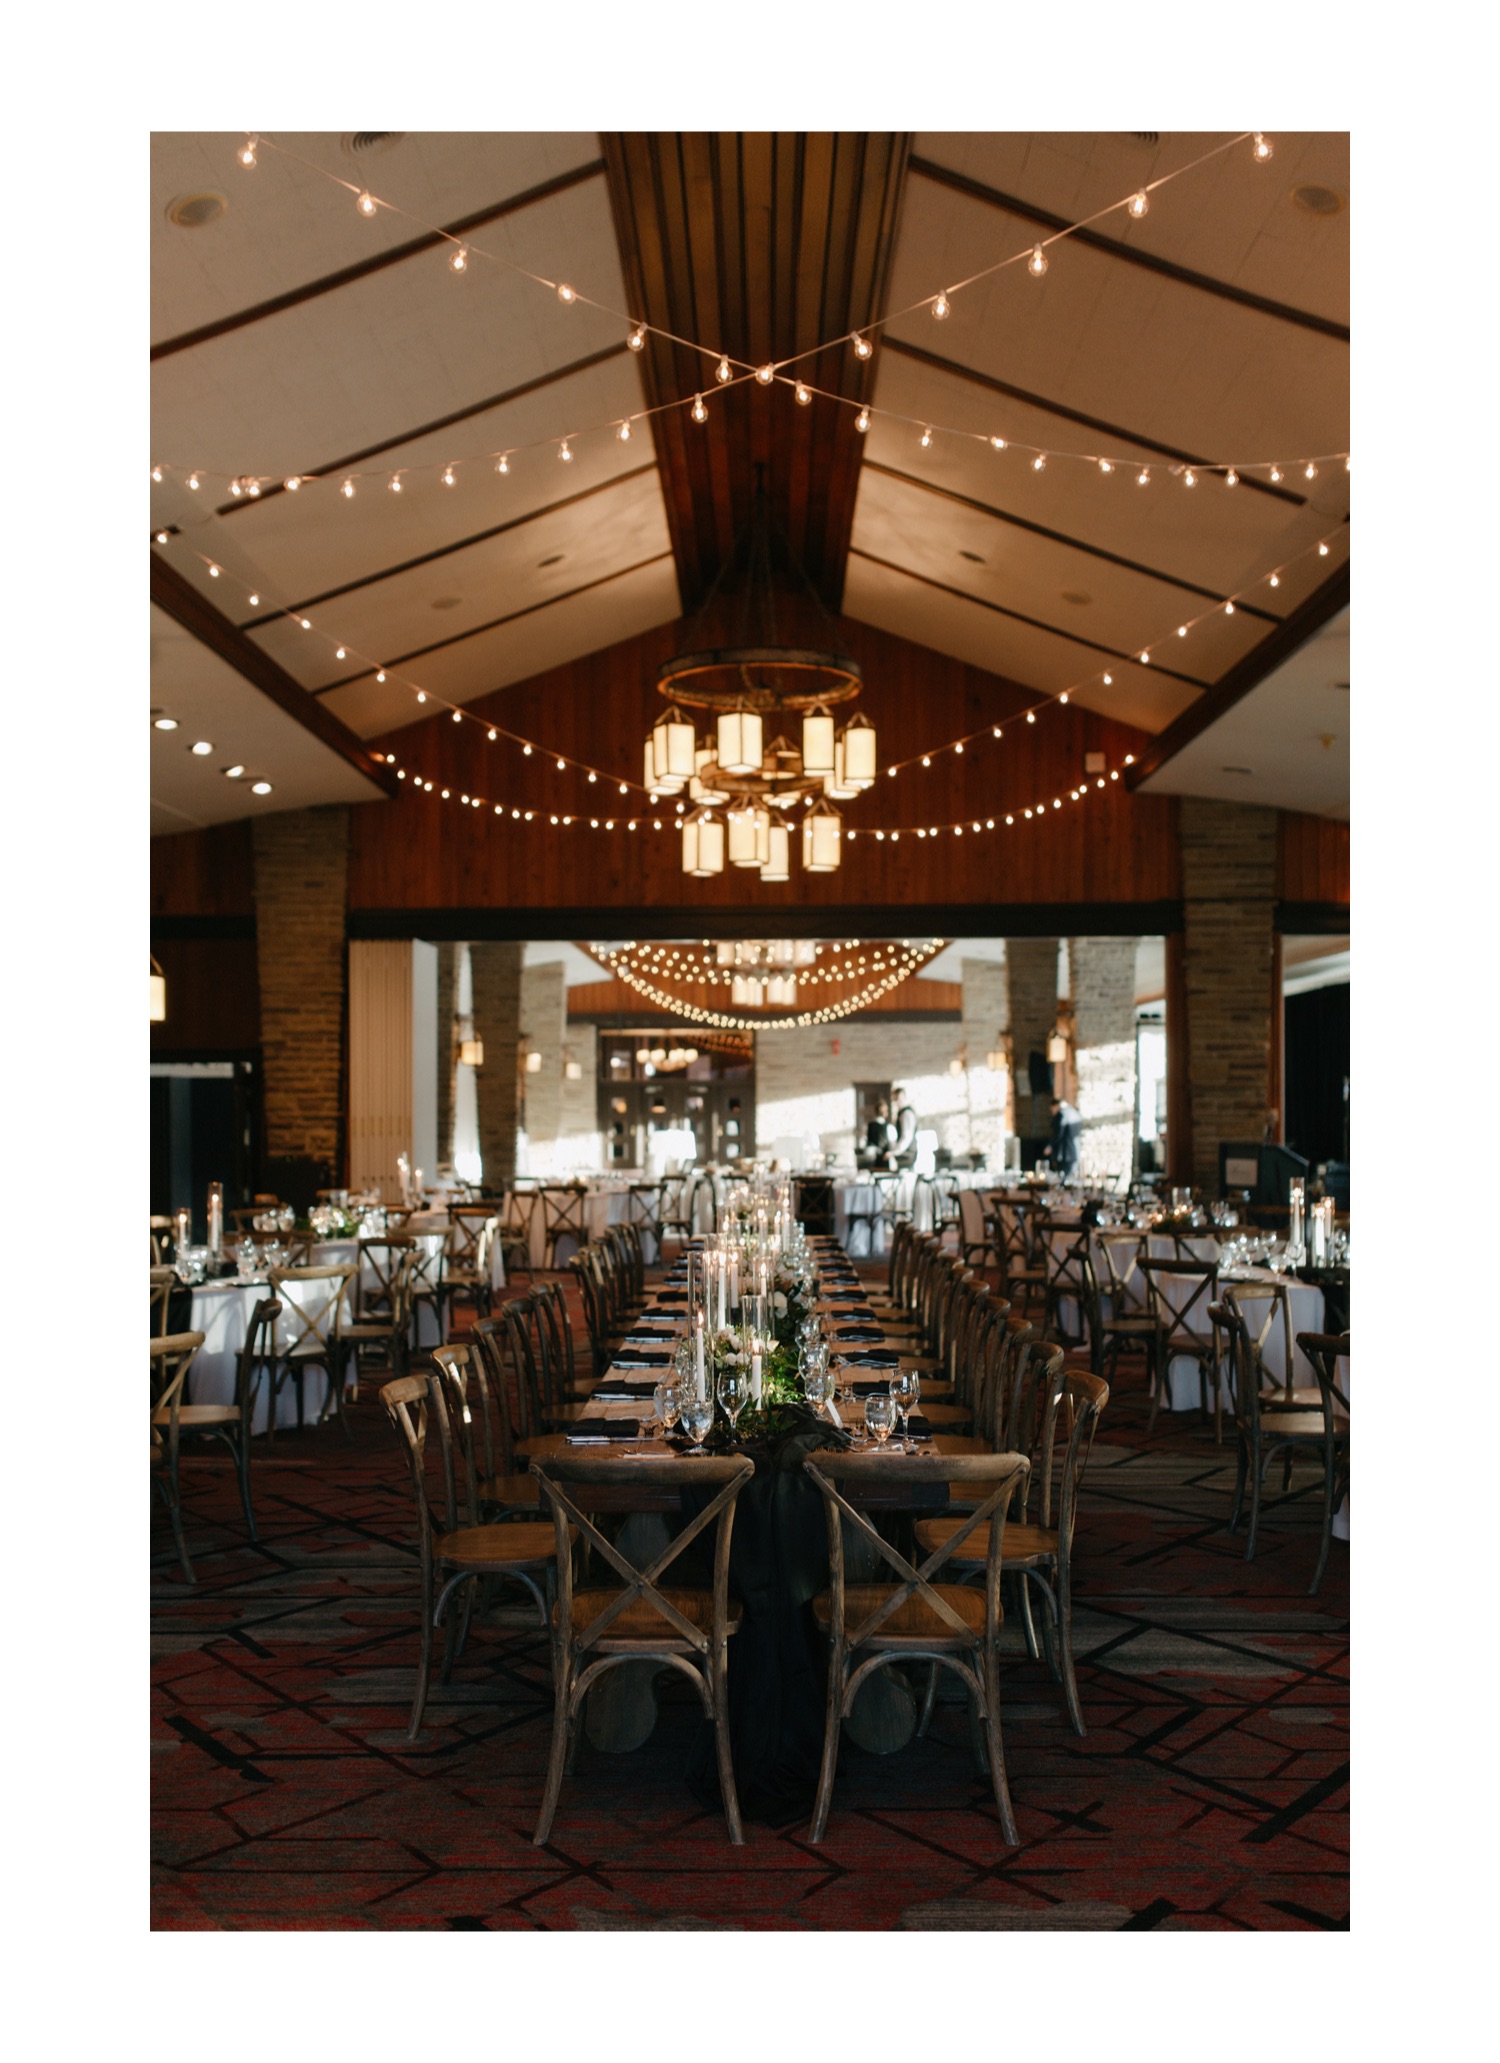 Beauvert Ballroom long table wedding reception layout with strung fairy lights